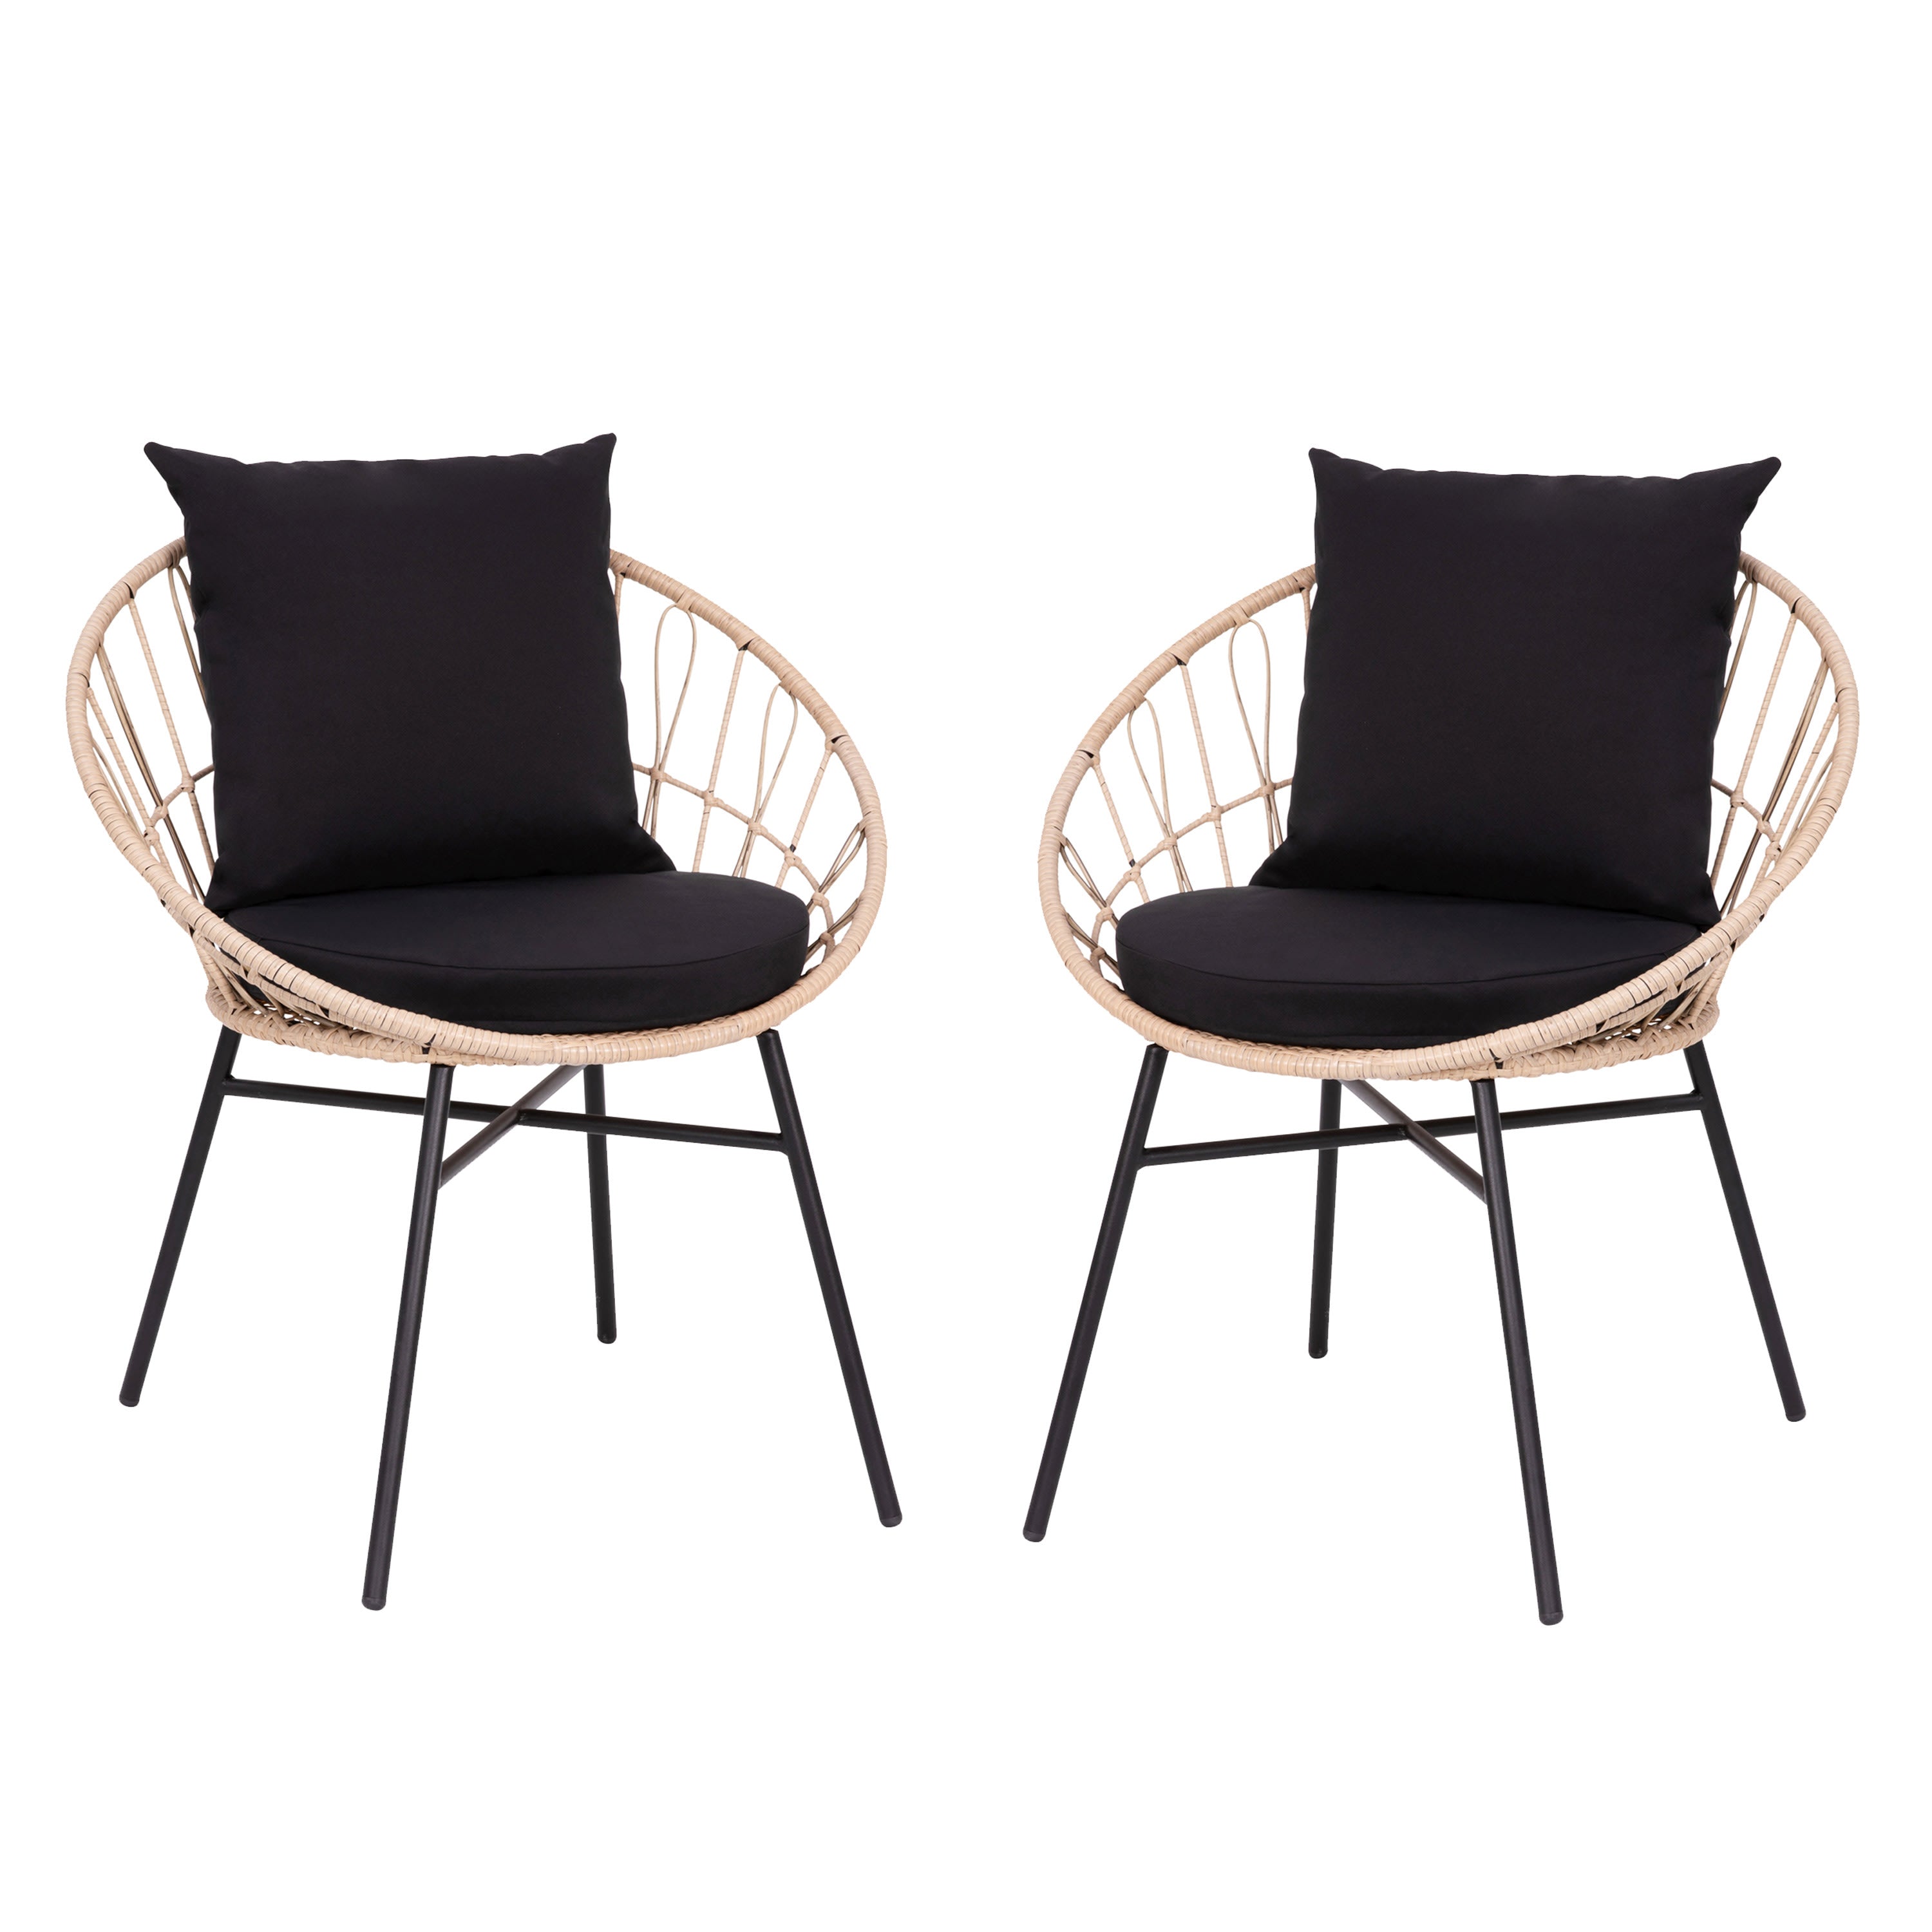 Flash Furniture Devon Indoor & Outdoor Modern Papasan Patio Chairs Rope with Tan Finish PE Wicker Rattan & Black Cushions - Set of 2